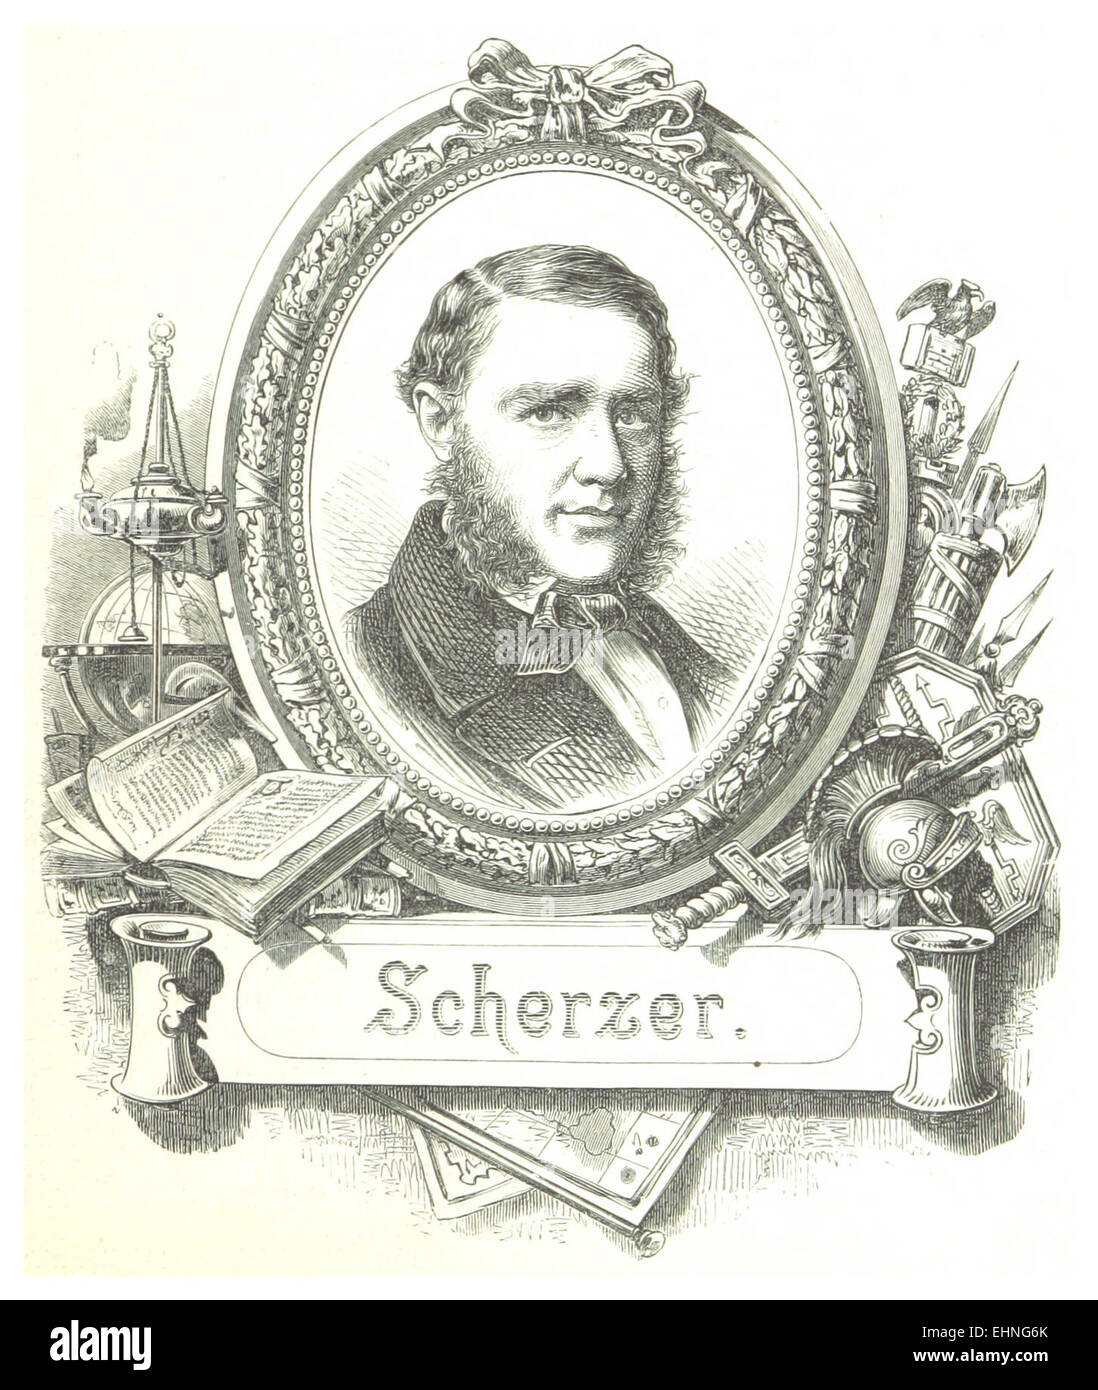 RS(1872) p2.0585 SCHERZER Stock Photo